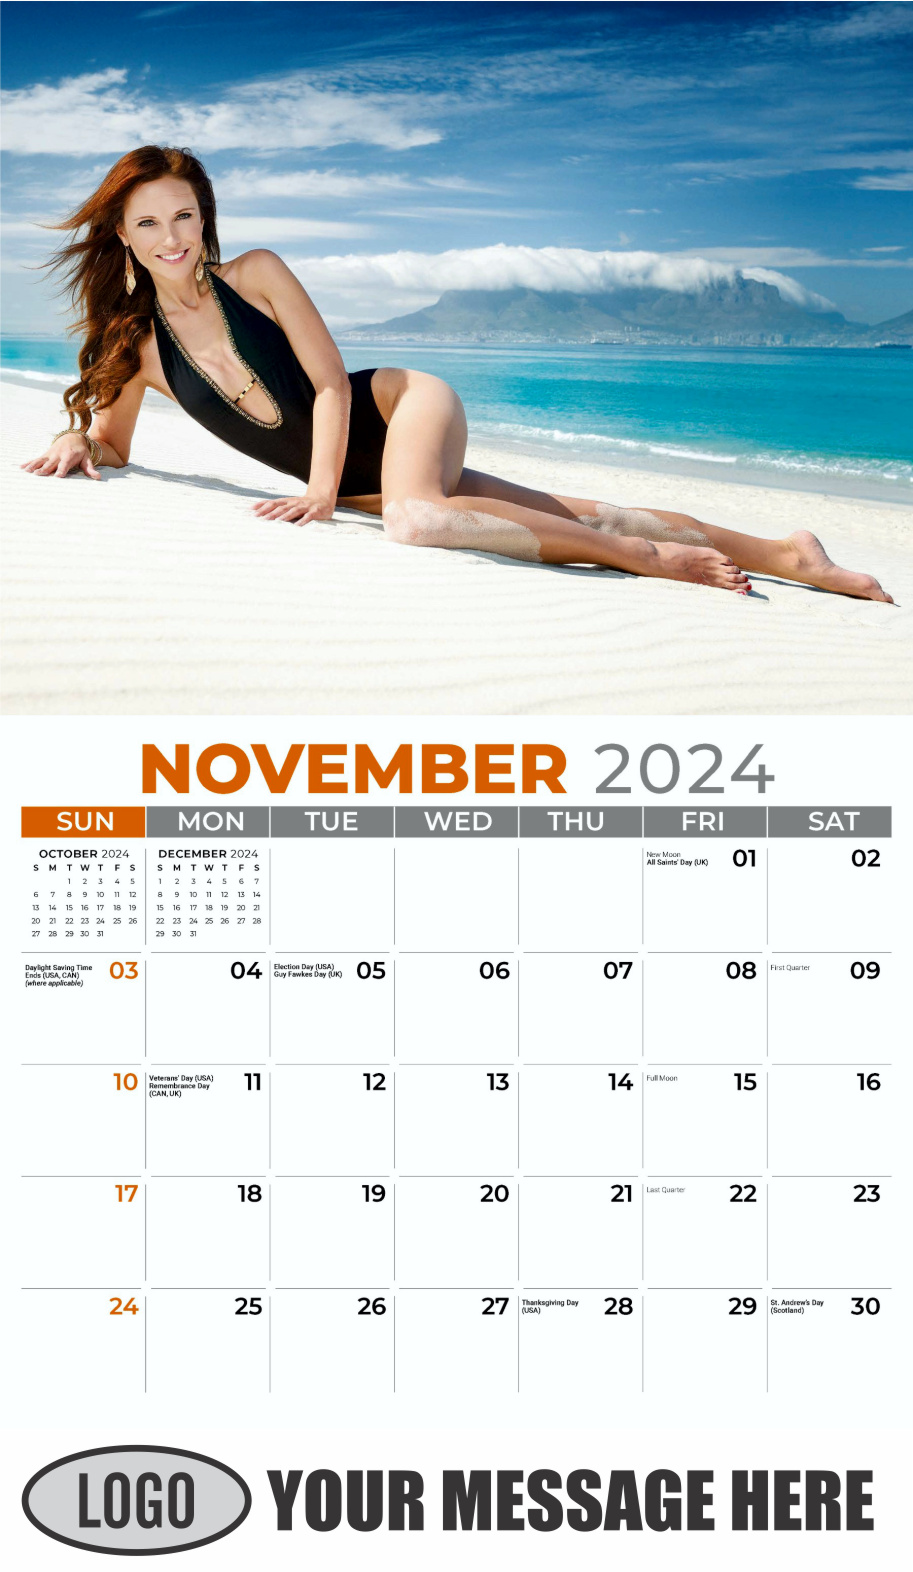 Swimsuits 2024 Business Promotional Wall Calendar - November